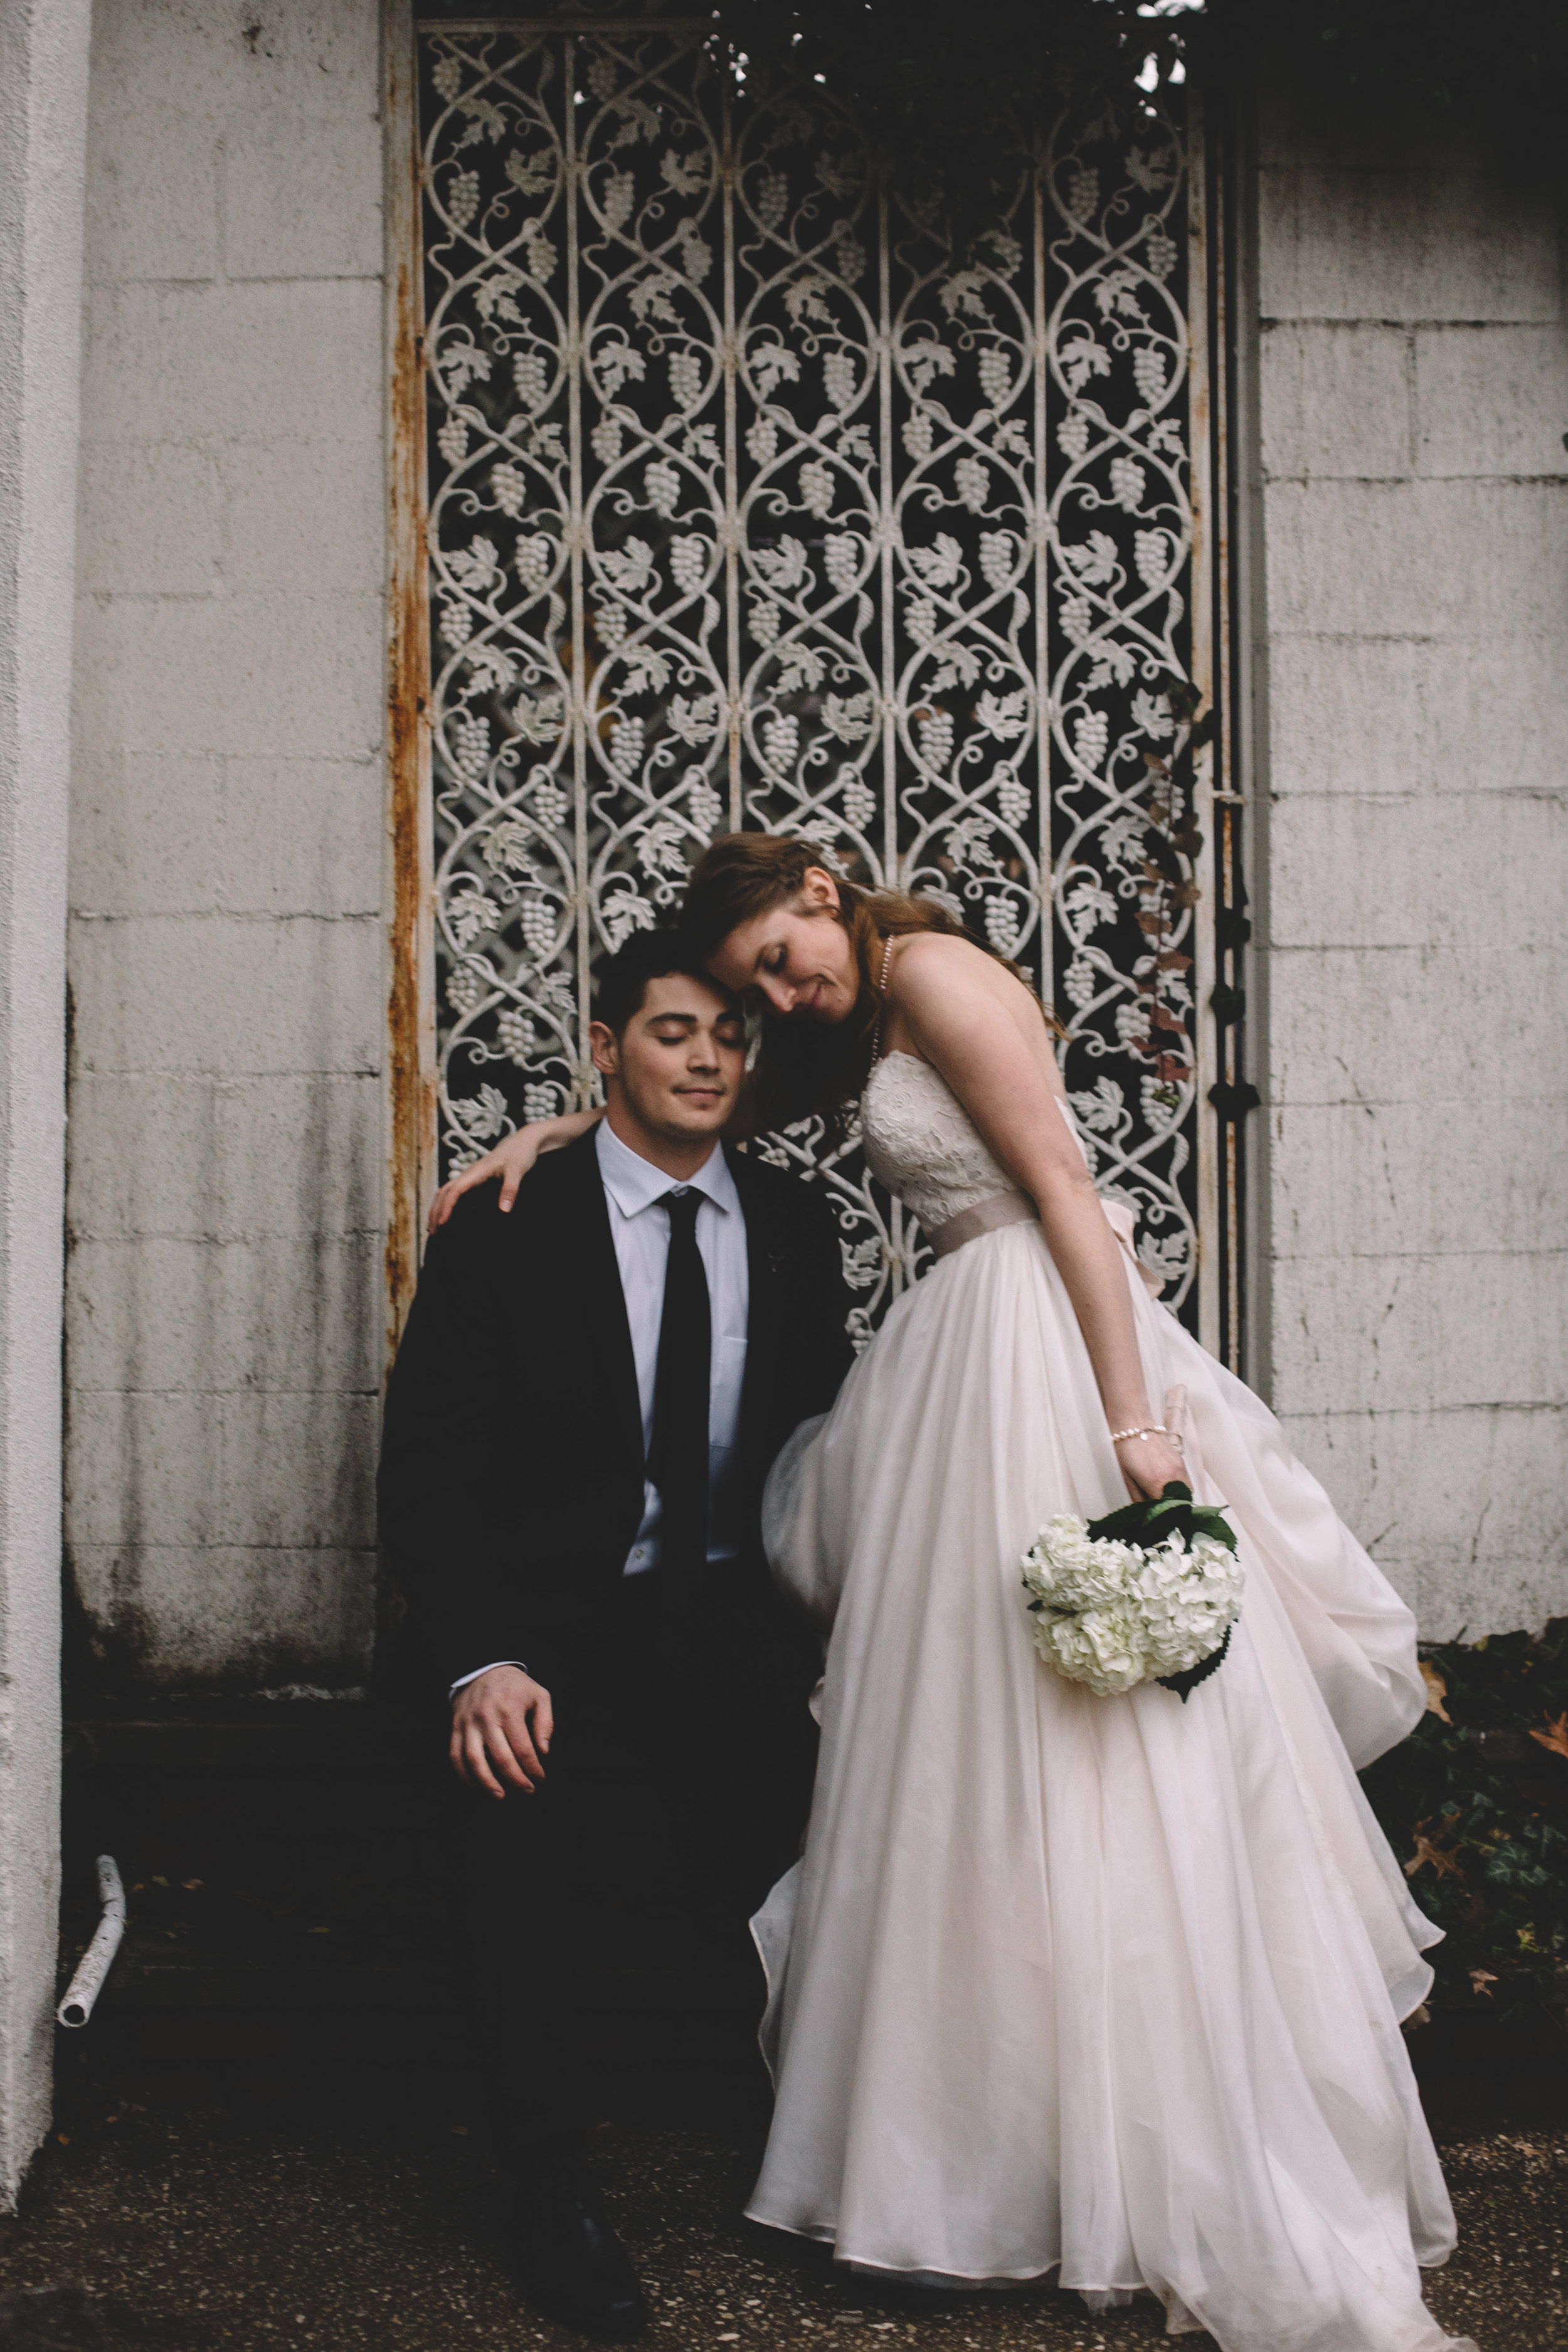 Jake + Brittney Balbas Airbnb Carriage House Wedding Evansville IN (343 of 426).jpg